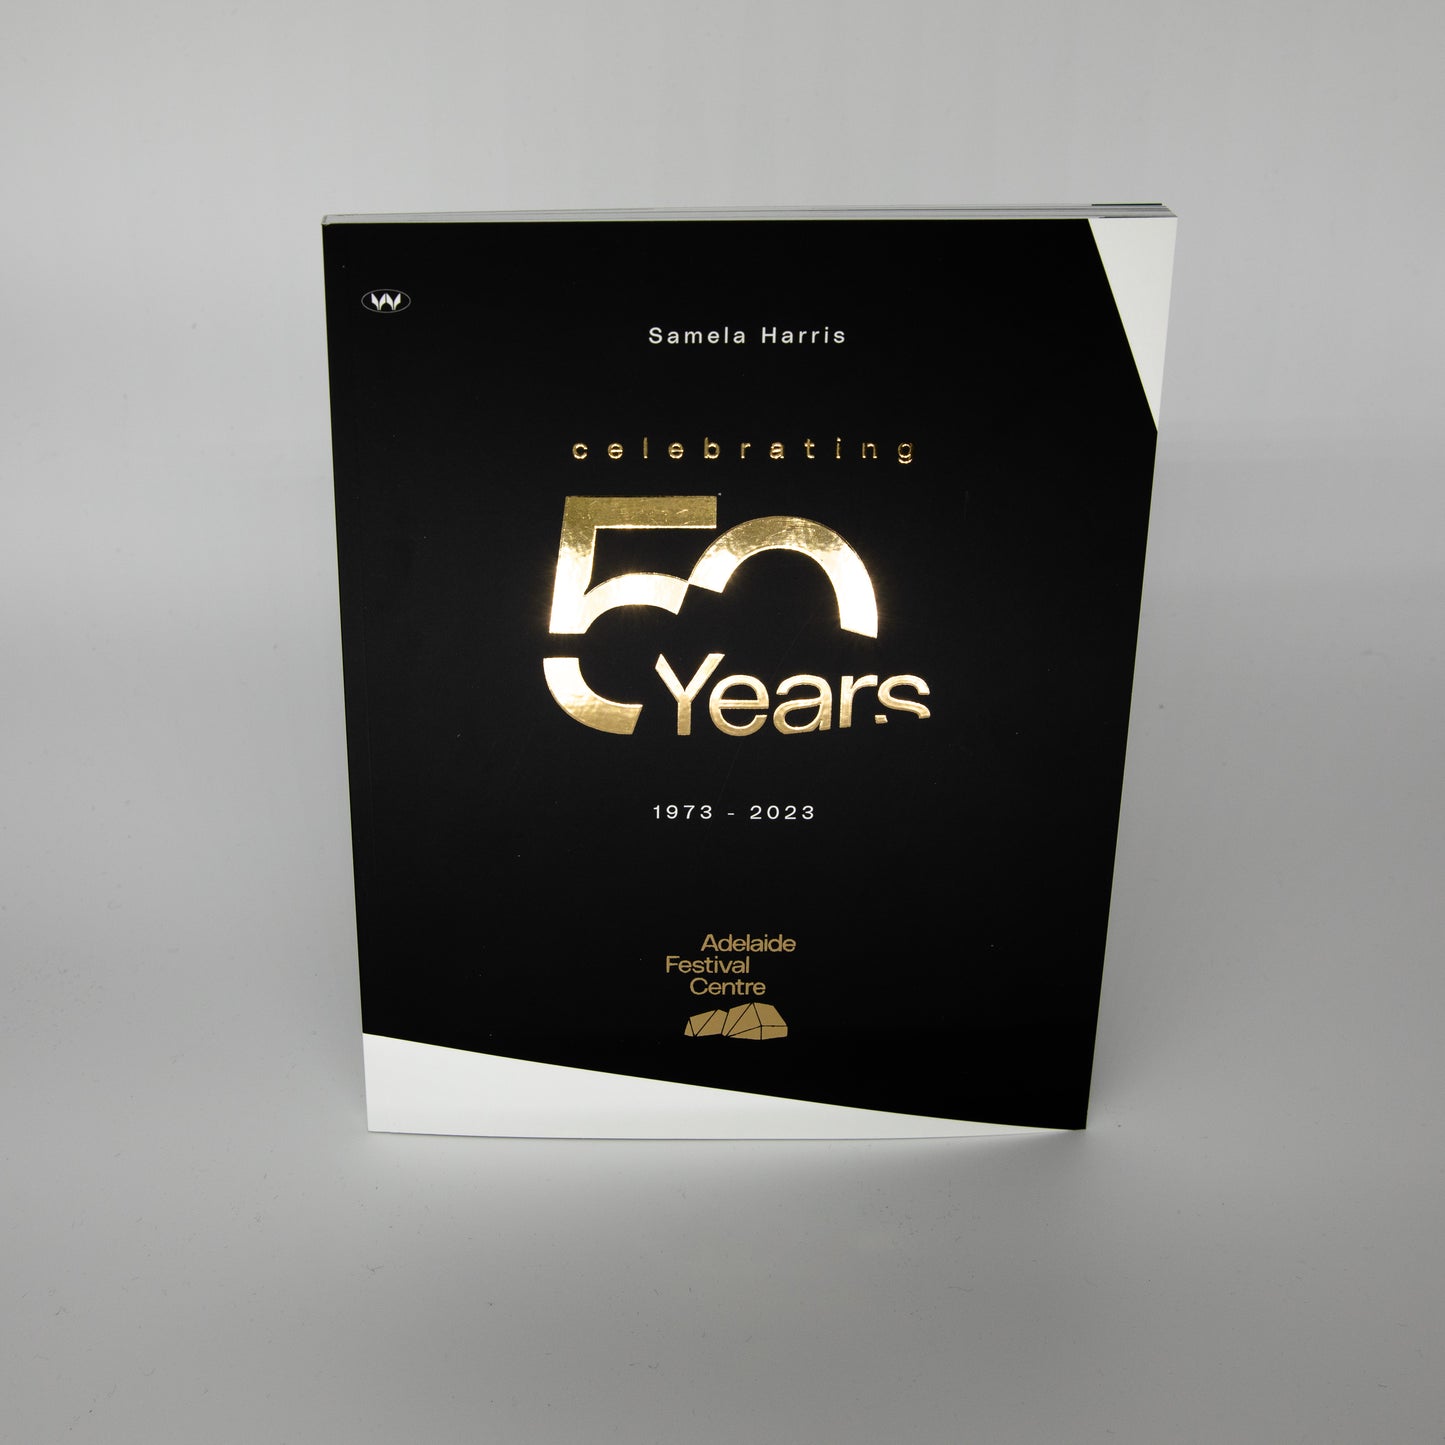 Celebrating 50 Years by Samela Harris